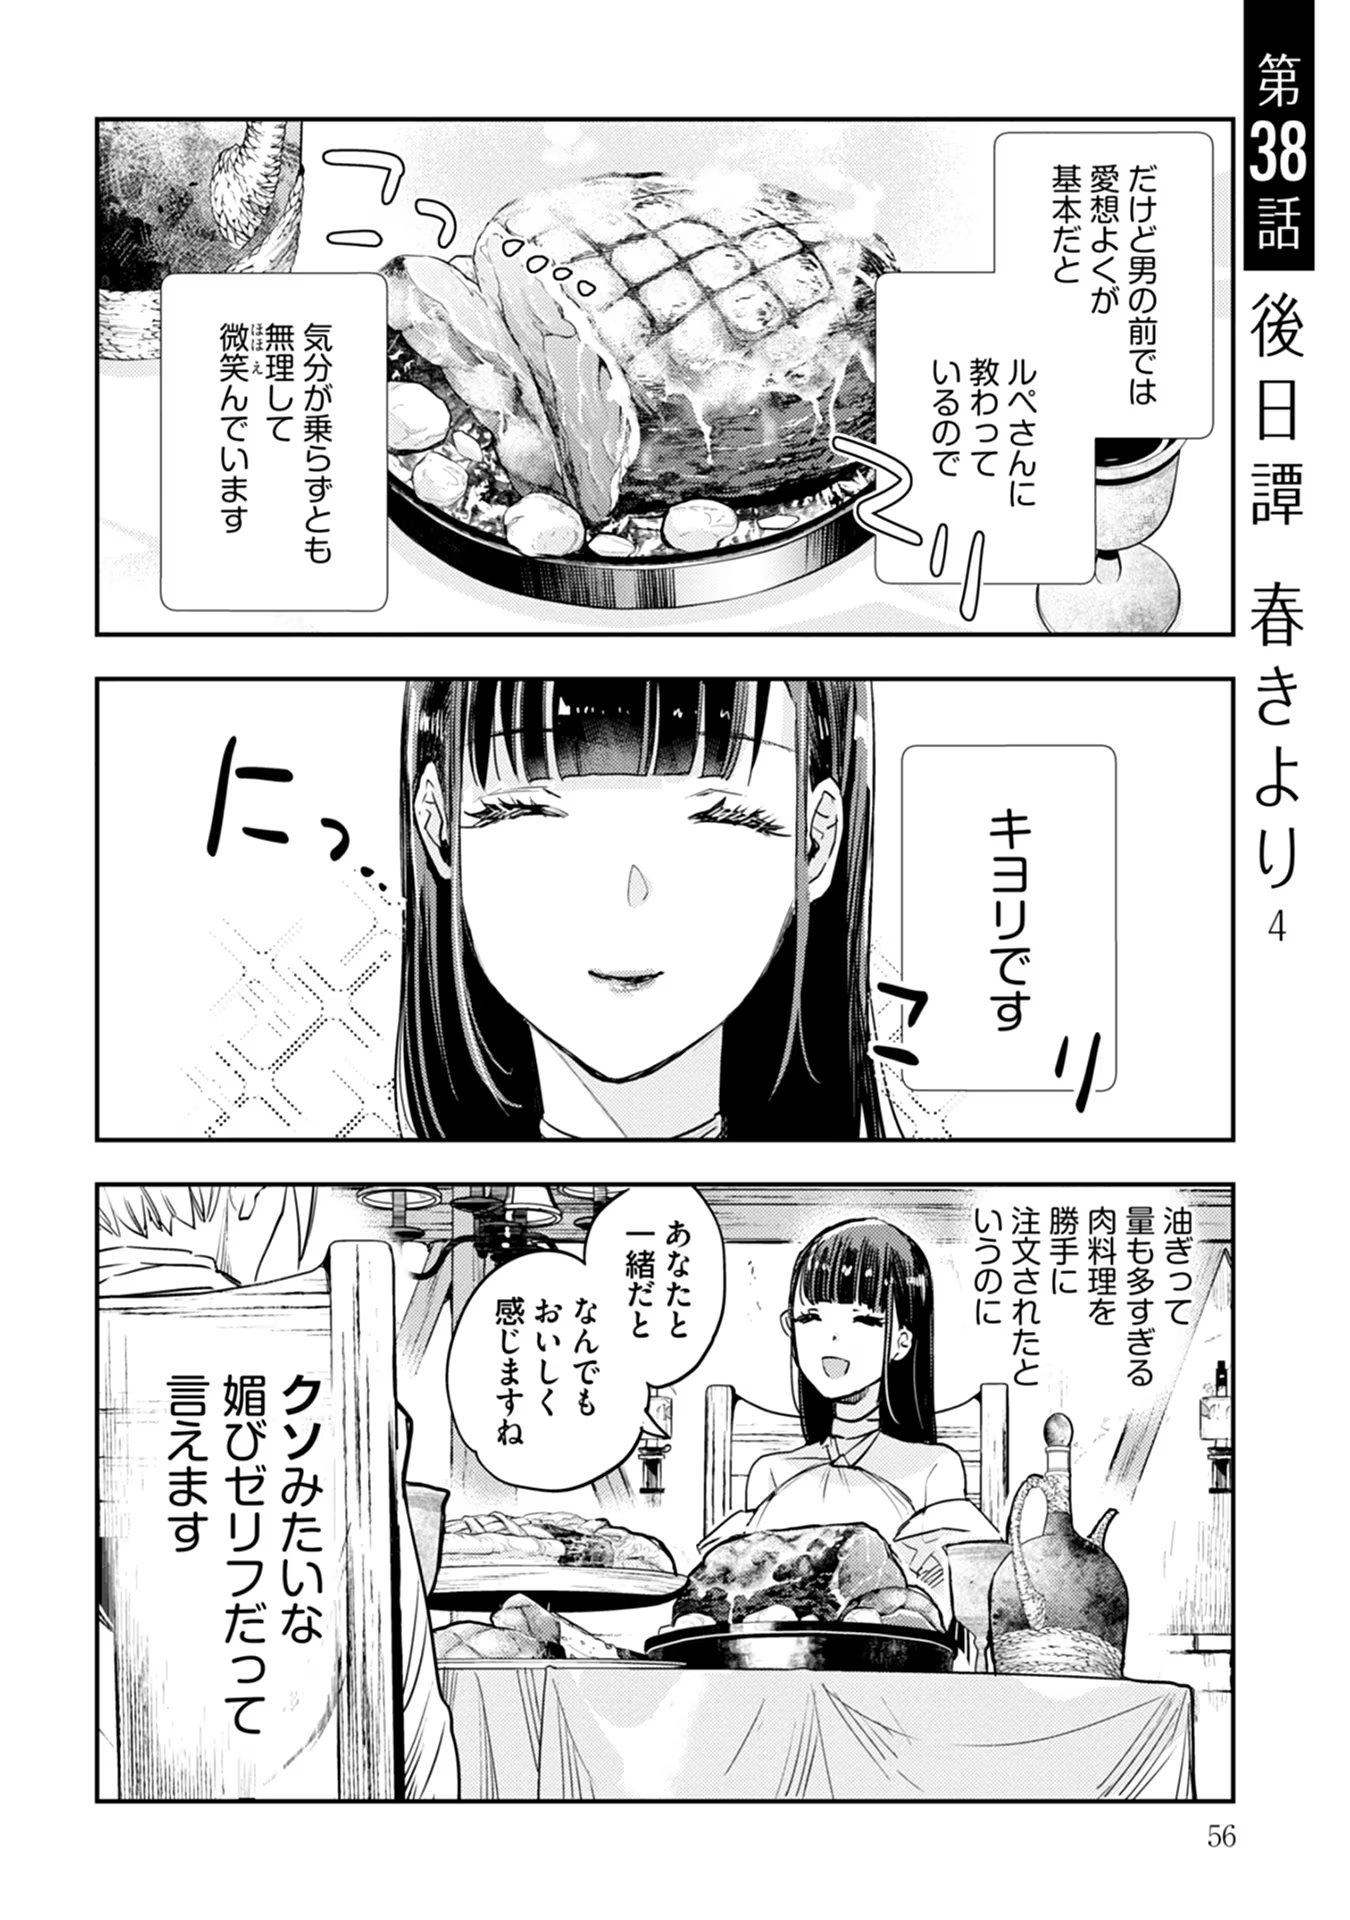 JK Haru Wa Isekai De Shoufu Ni Natta - Chapter 38 - Page 1